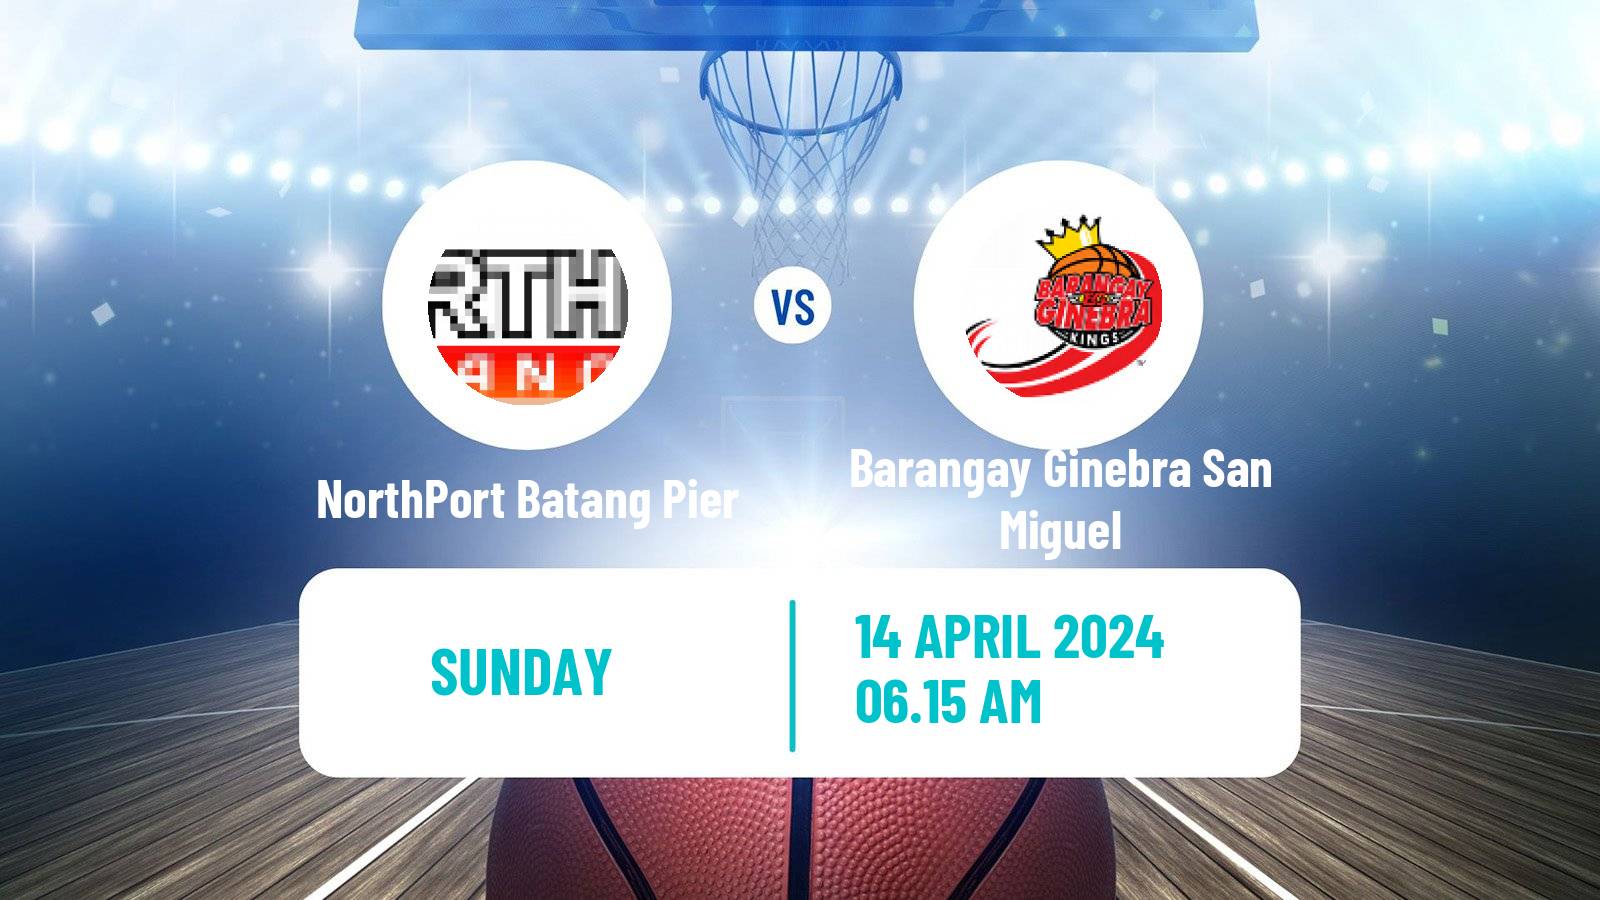 Basketball Philippines Cup NorthPort Batang Pier - Barangay Ginebra San Miguel